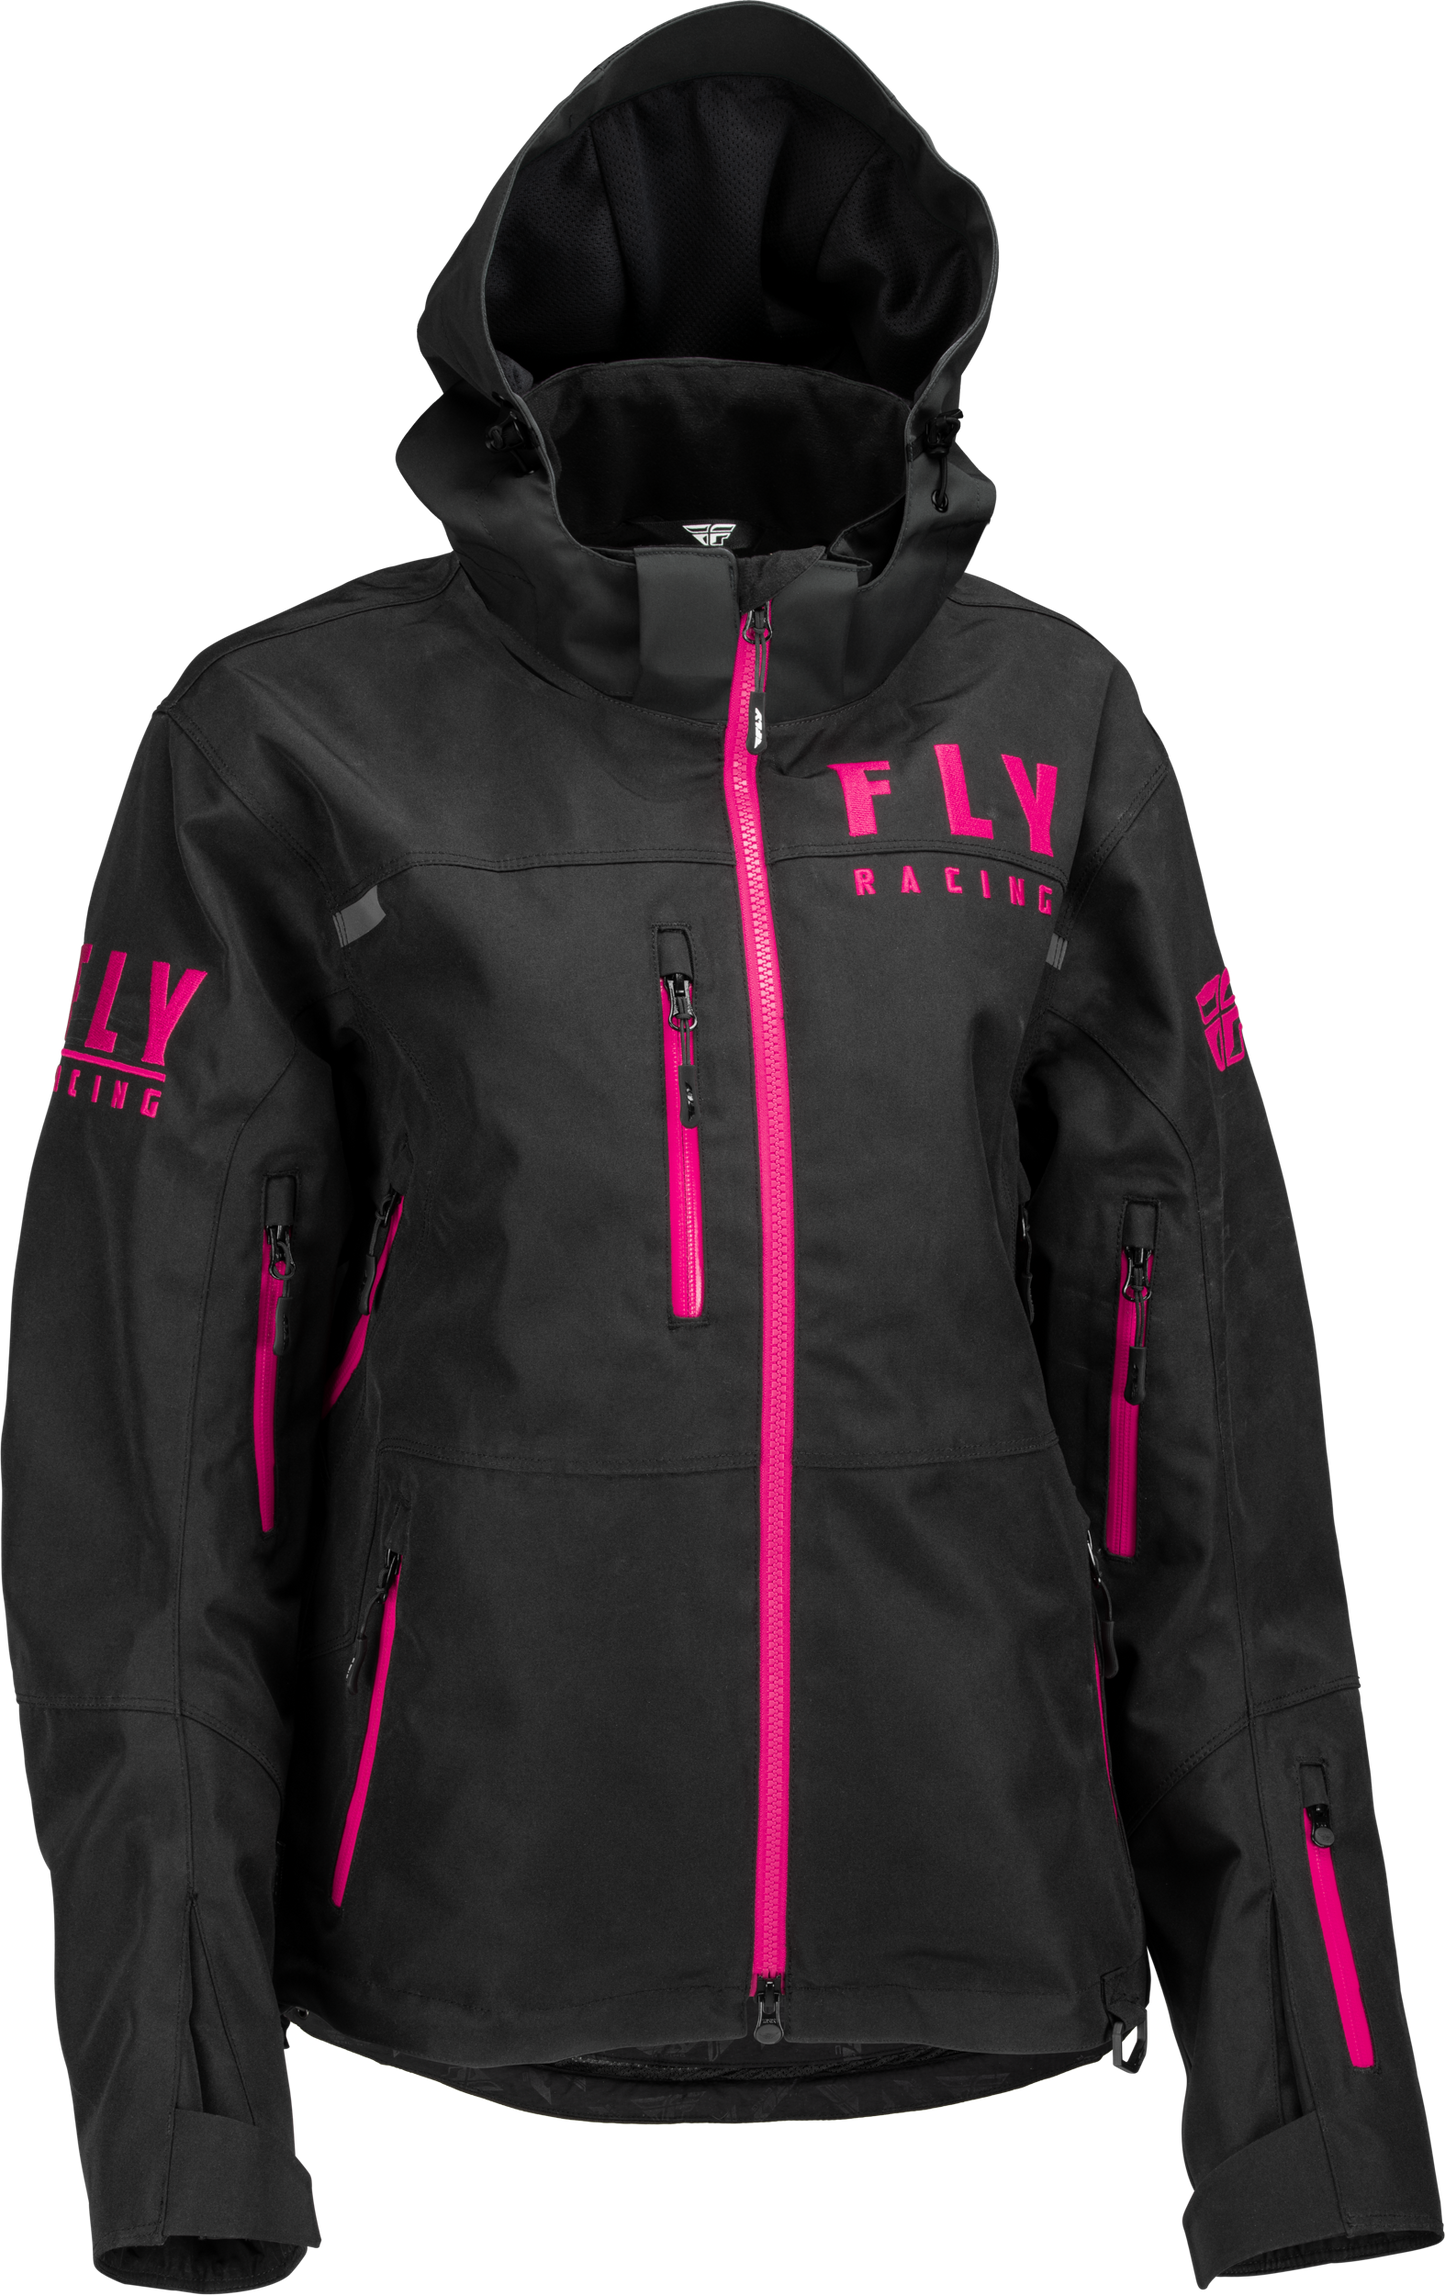 FLY RACING Women's Carbon Jacket Black/Pink 3x 470-45023X